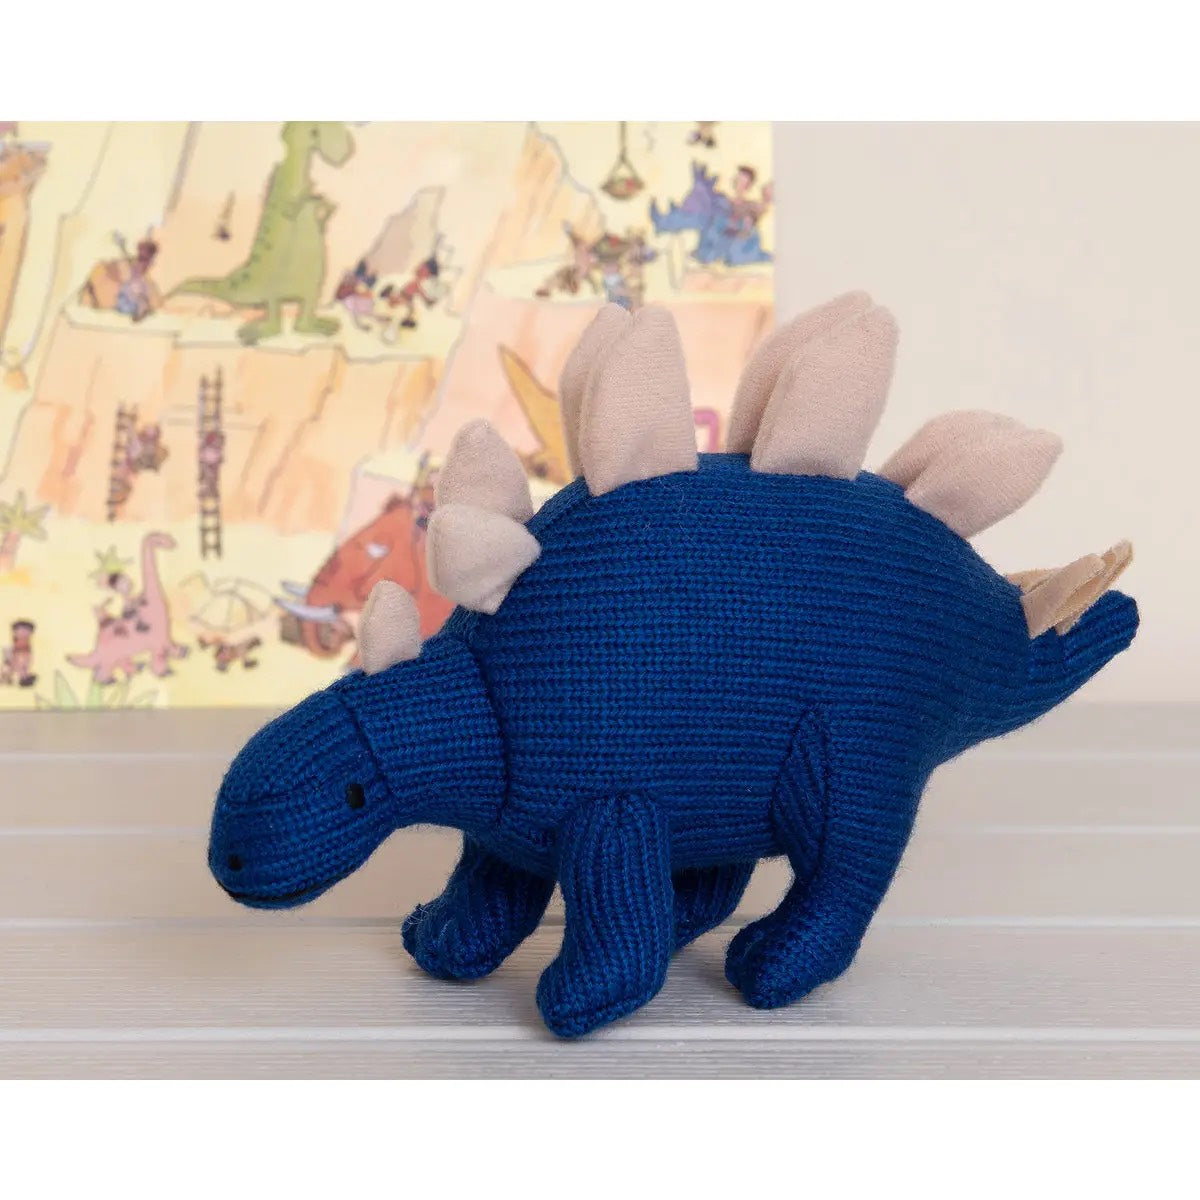 Blue Stegosaurus knitted rattle